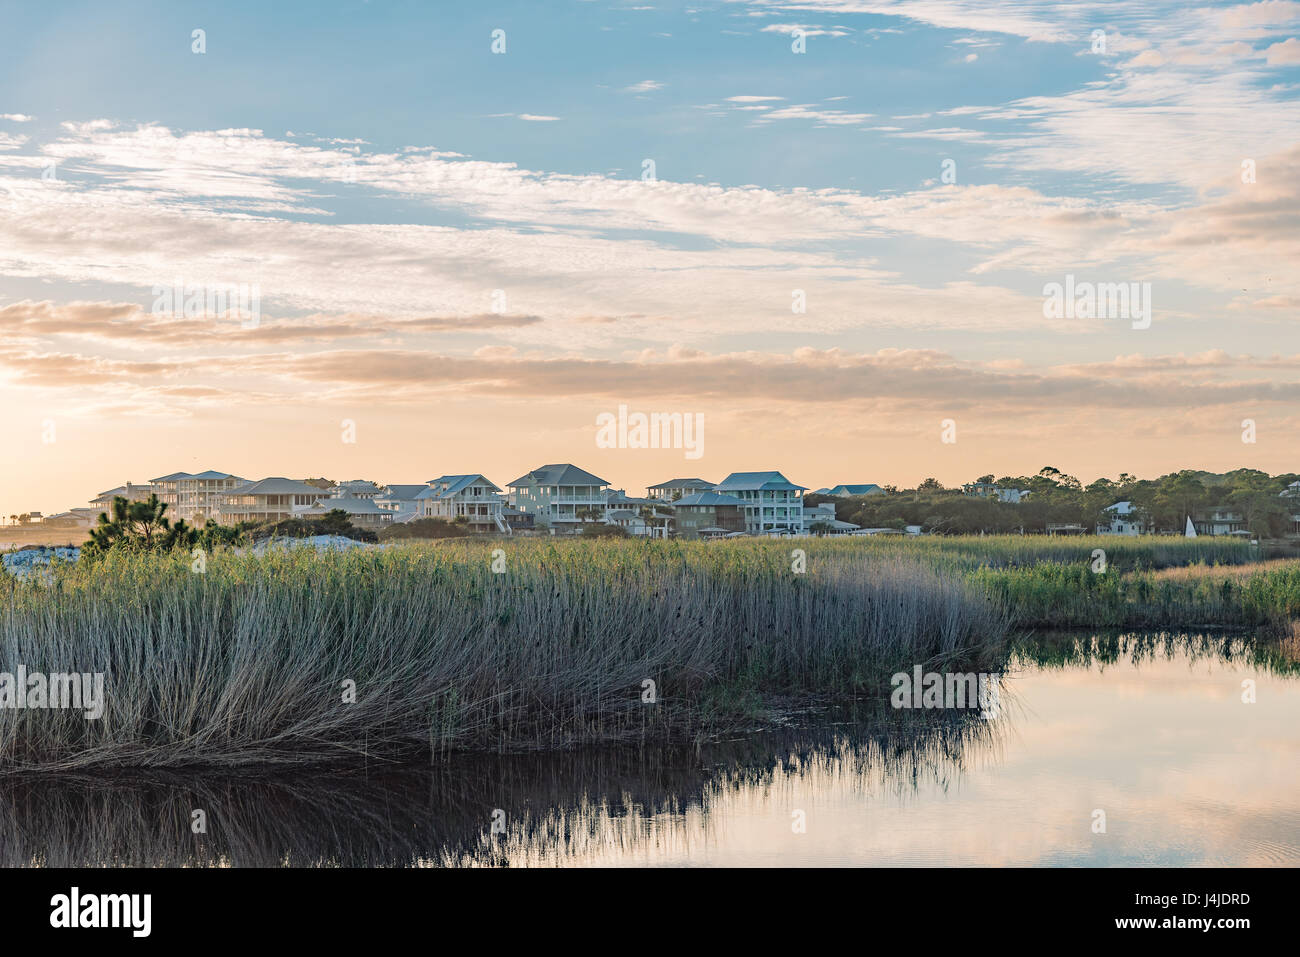 Rows of expensive homes along the shore of a coastal dune lake near Destin, Florida  USA, provides quiet coastal living. Stock Photo